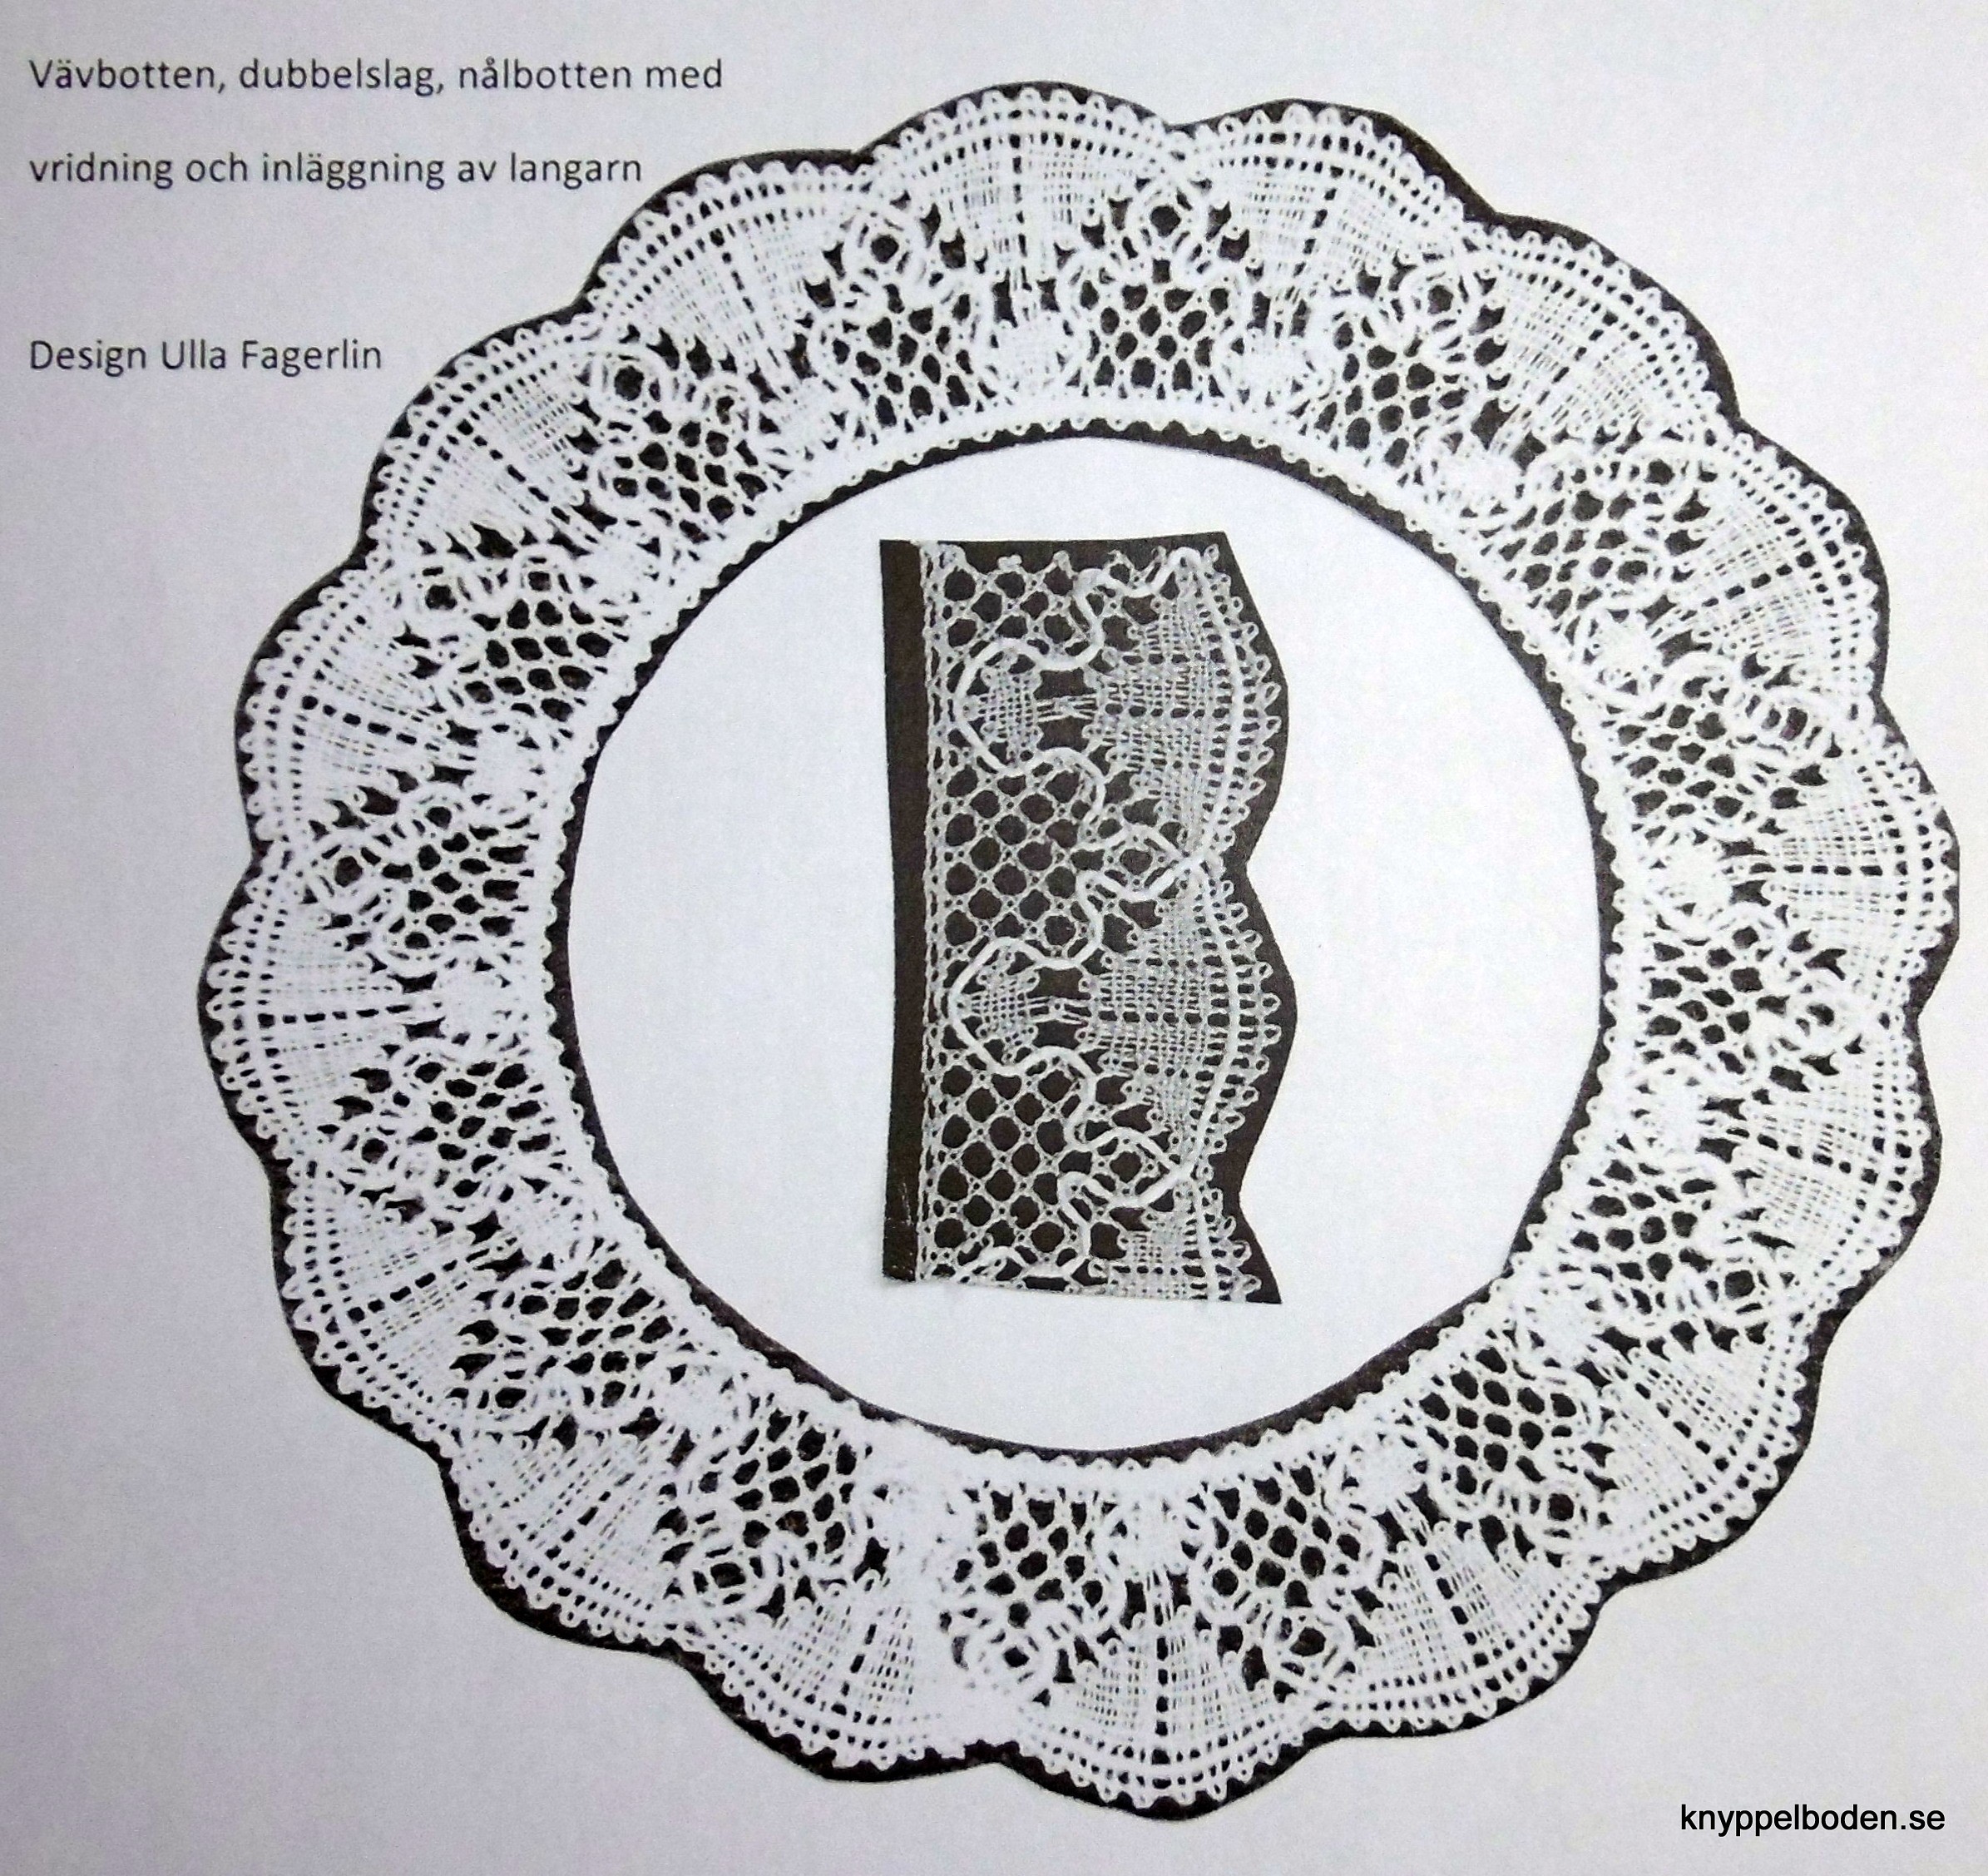 Ringdans diameter 13,5 cm